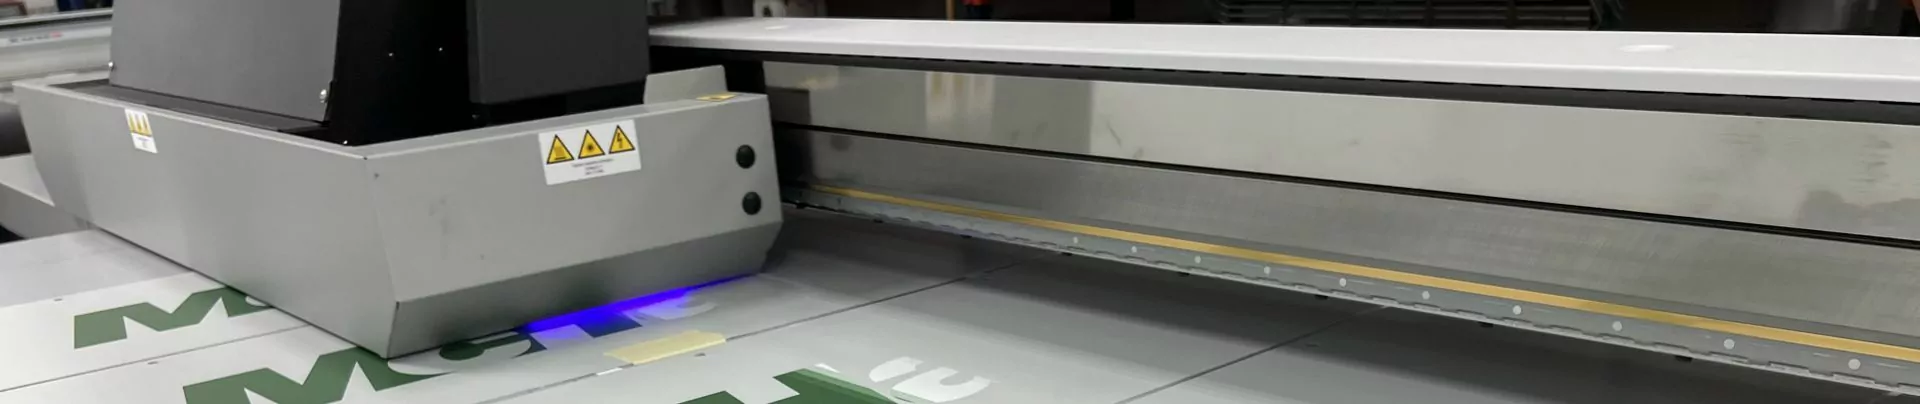 A digital print machine head